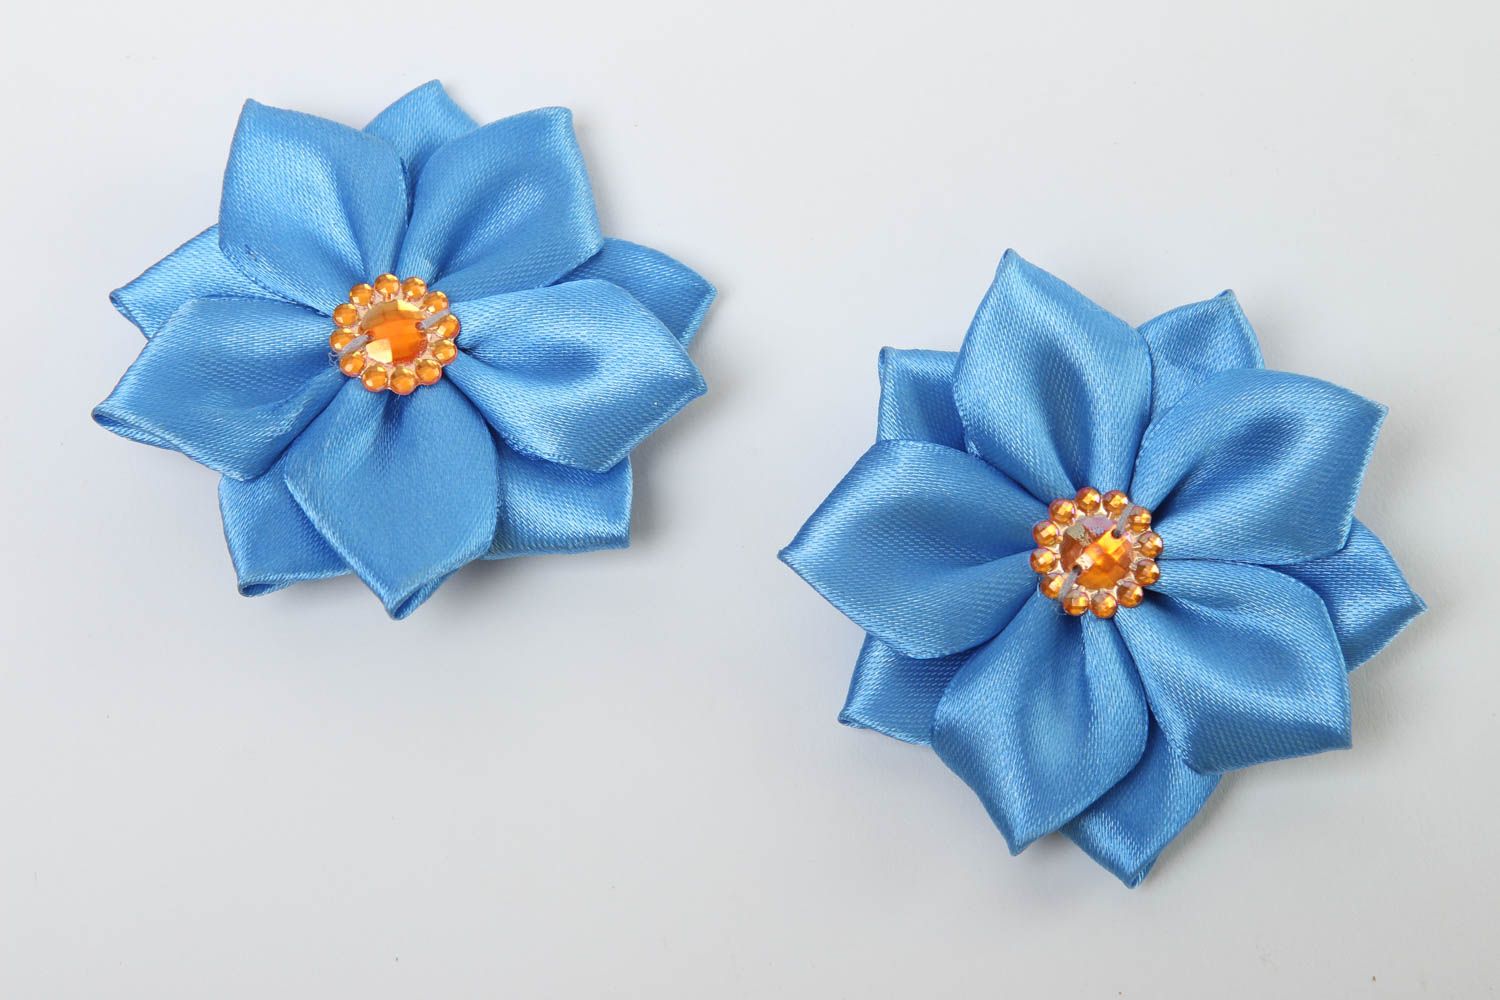 Handmade hair clips kanzashi flowers designer accessories gifts for girls photo 2